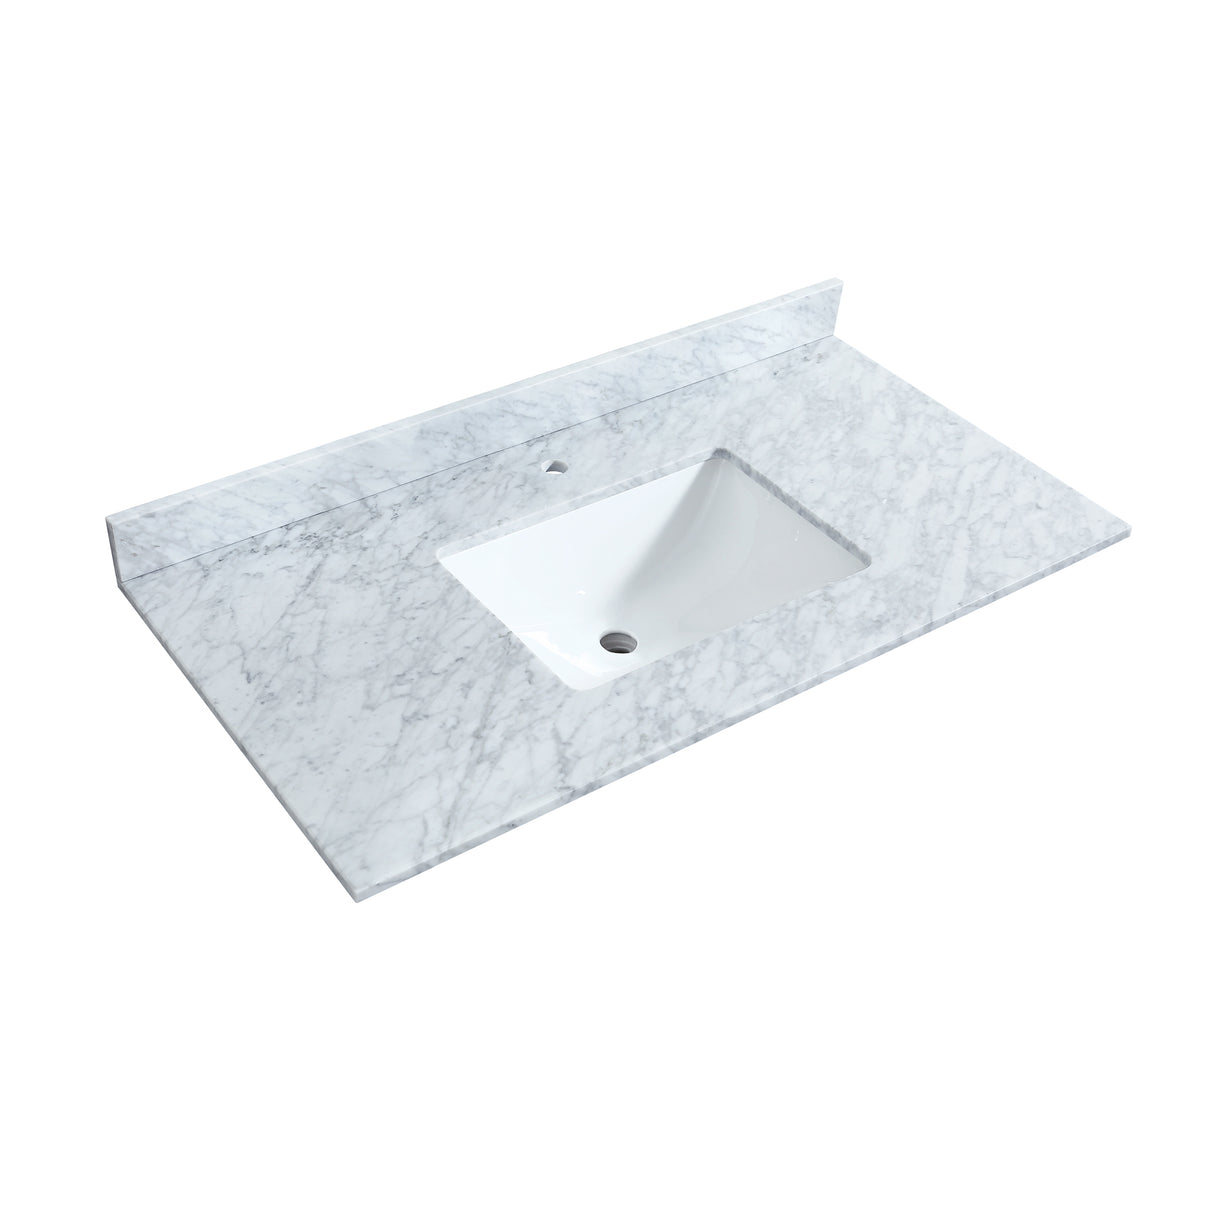 Maroni 42 Inch Single Bathroom Vanity in Light Straw White Carrara Marble Countertop Undermount Square Sink